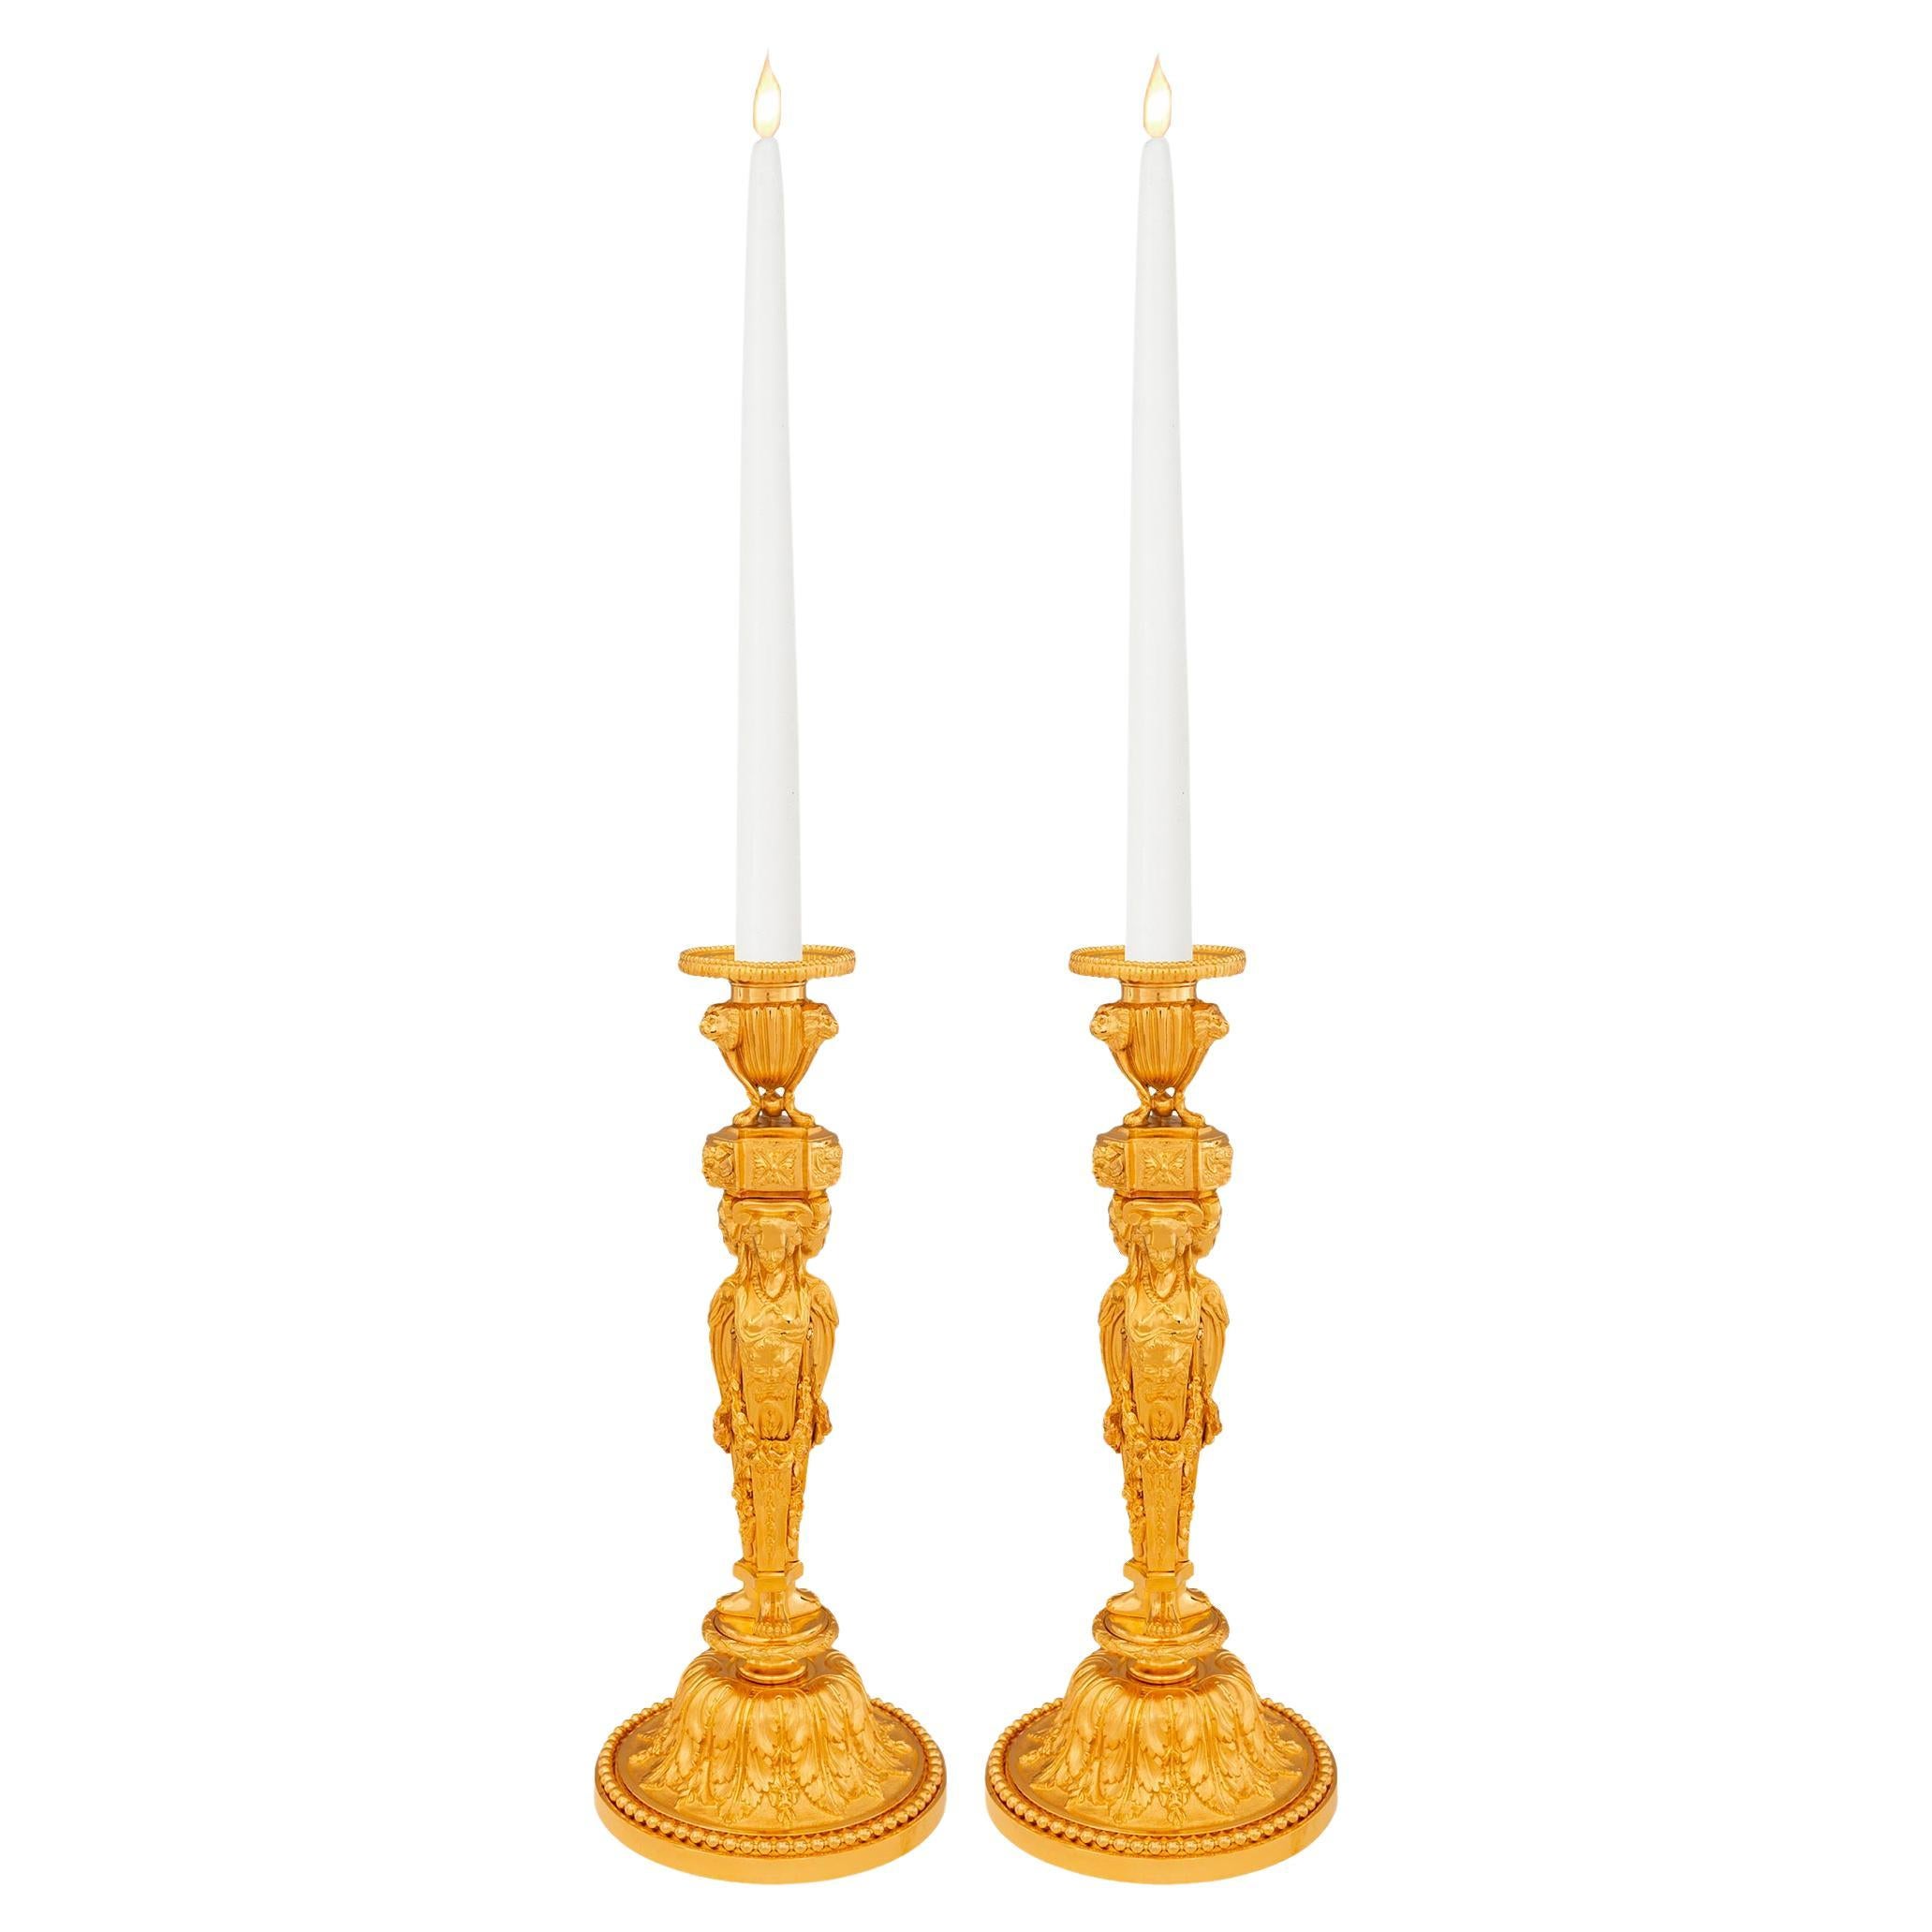 Pair of French 19th century Louis XVI st. Ormolu candlesticks.